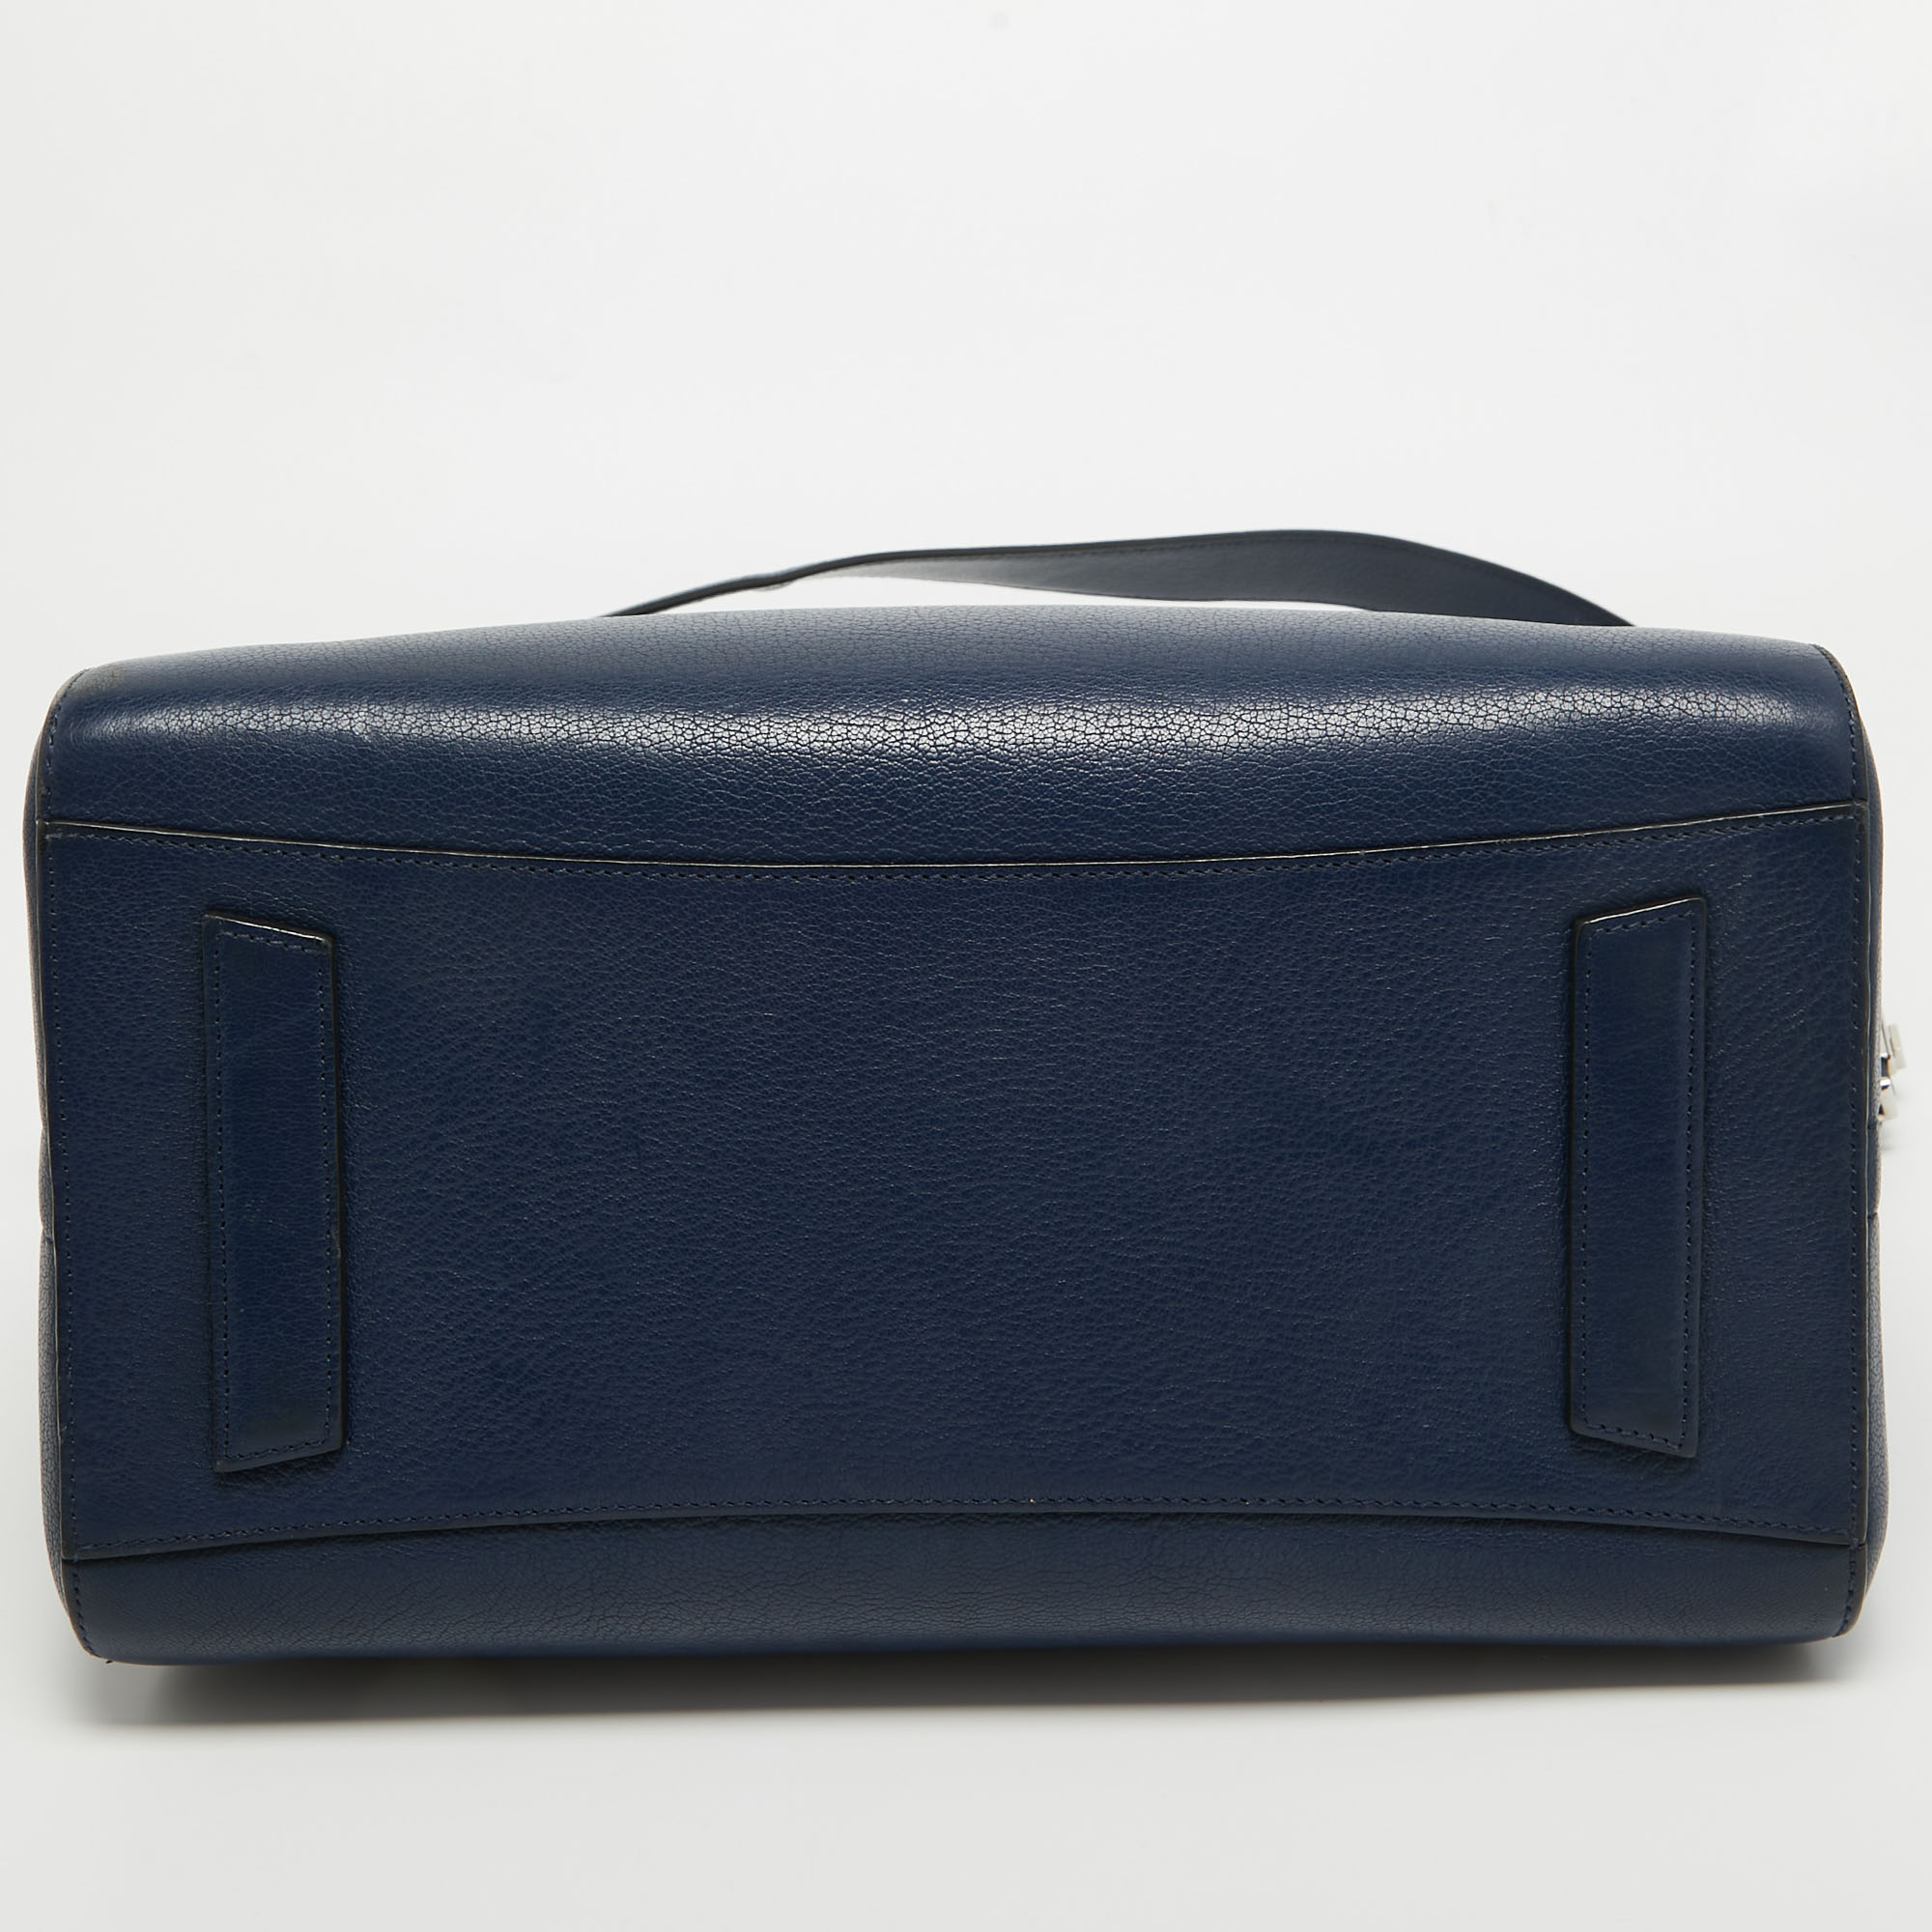 Givenchy Navy Blue Leather Medium Antigona Satchel